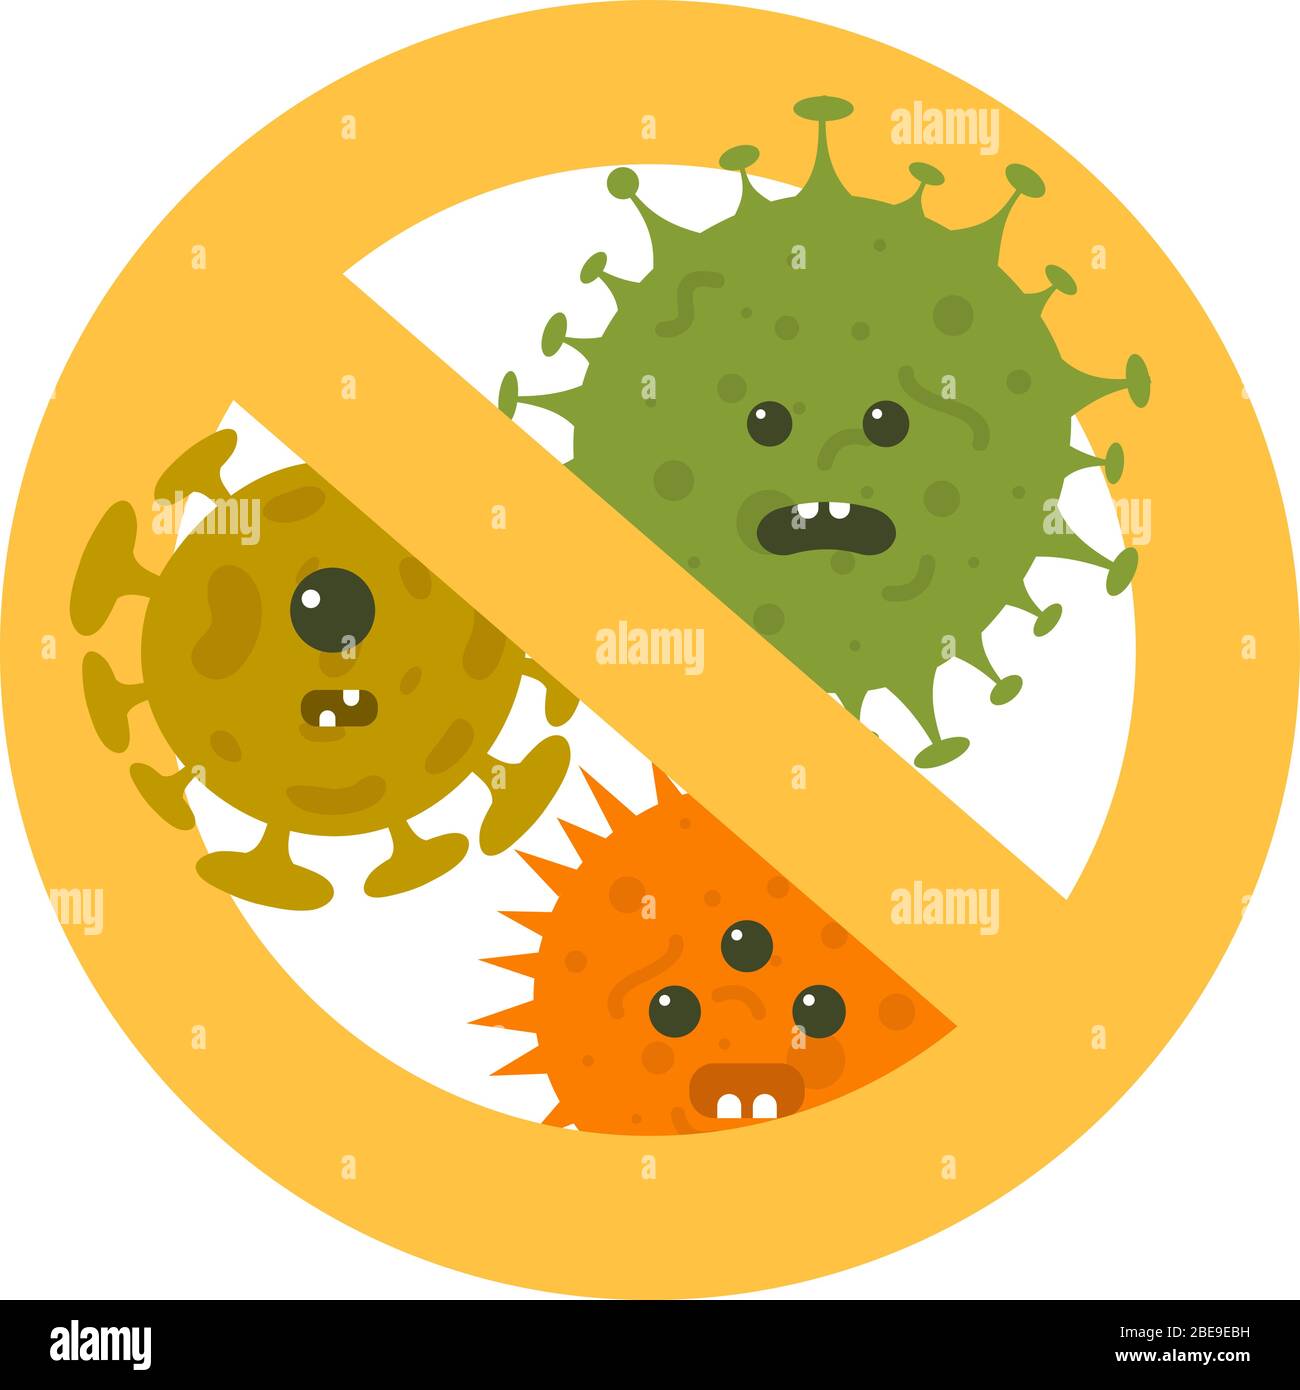 Stoppen Mikroben Cartoon Vektor Illustration. Anti-Bakterien-Symbol und Schutz-Infektion Stock Vektor